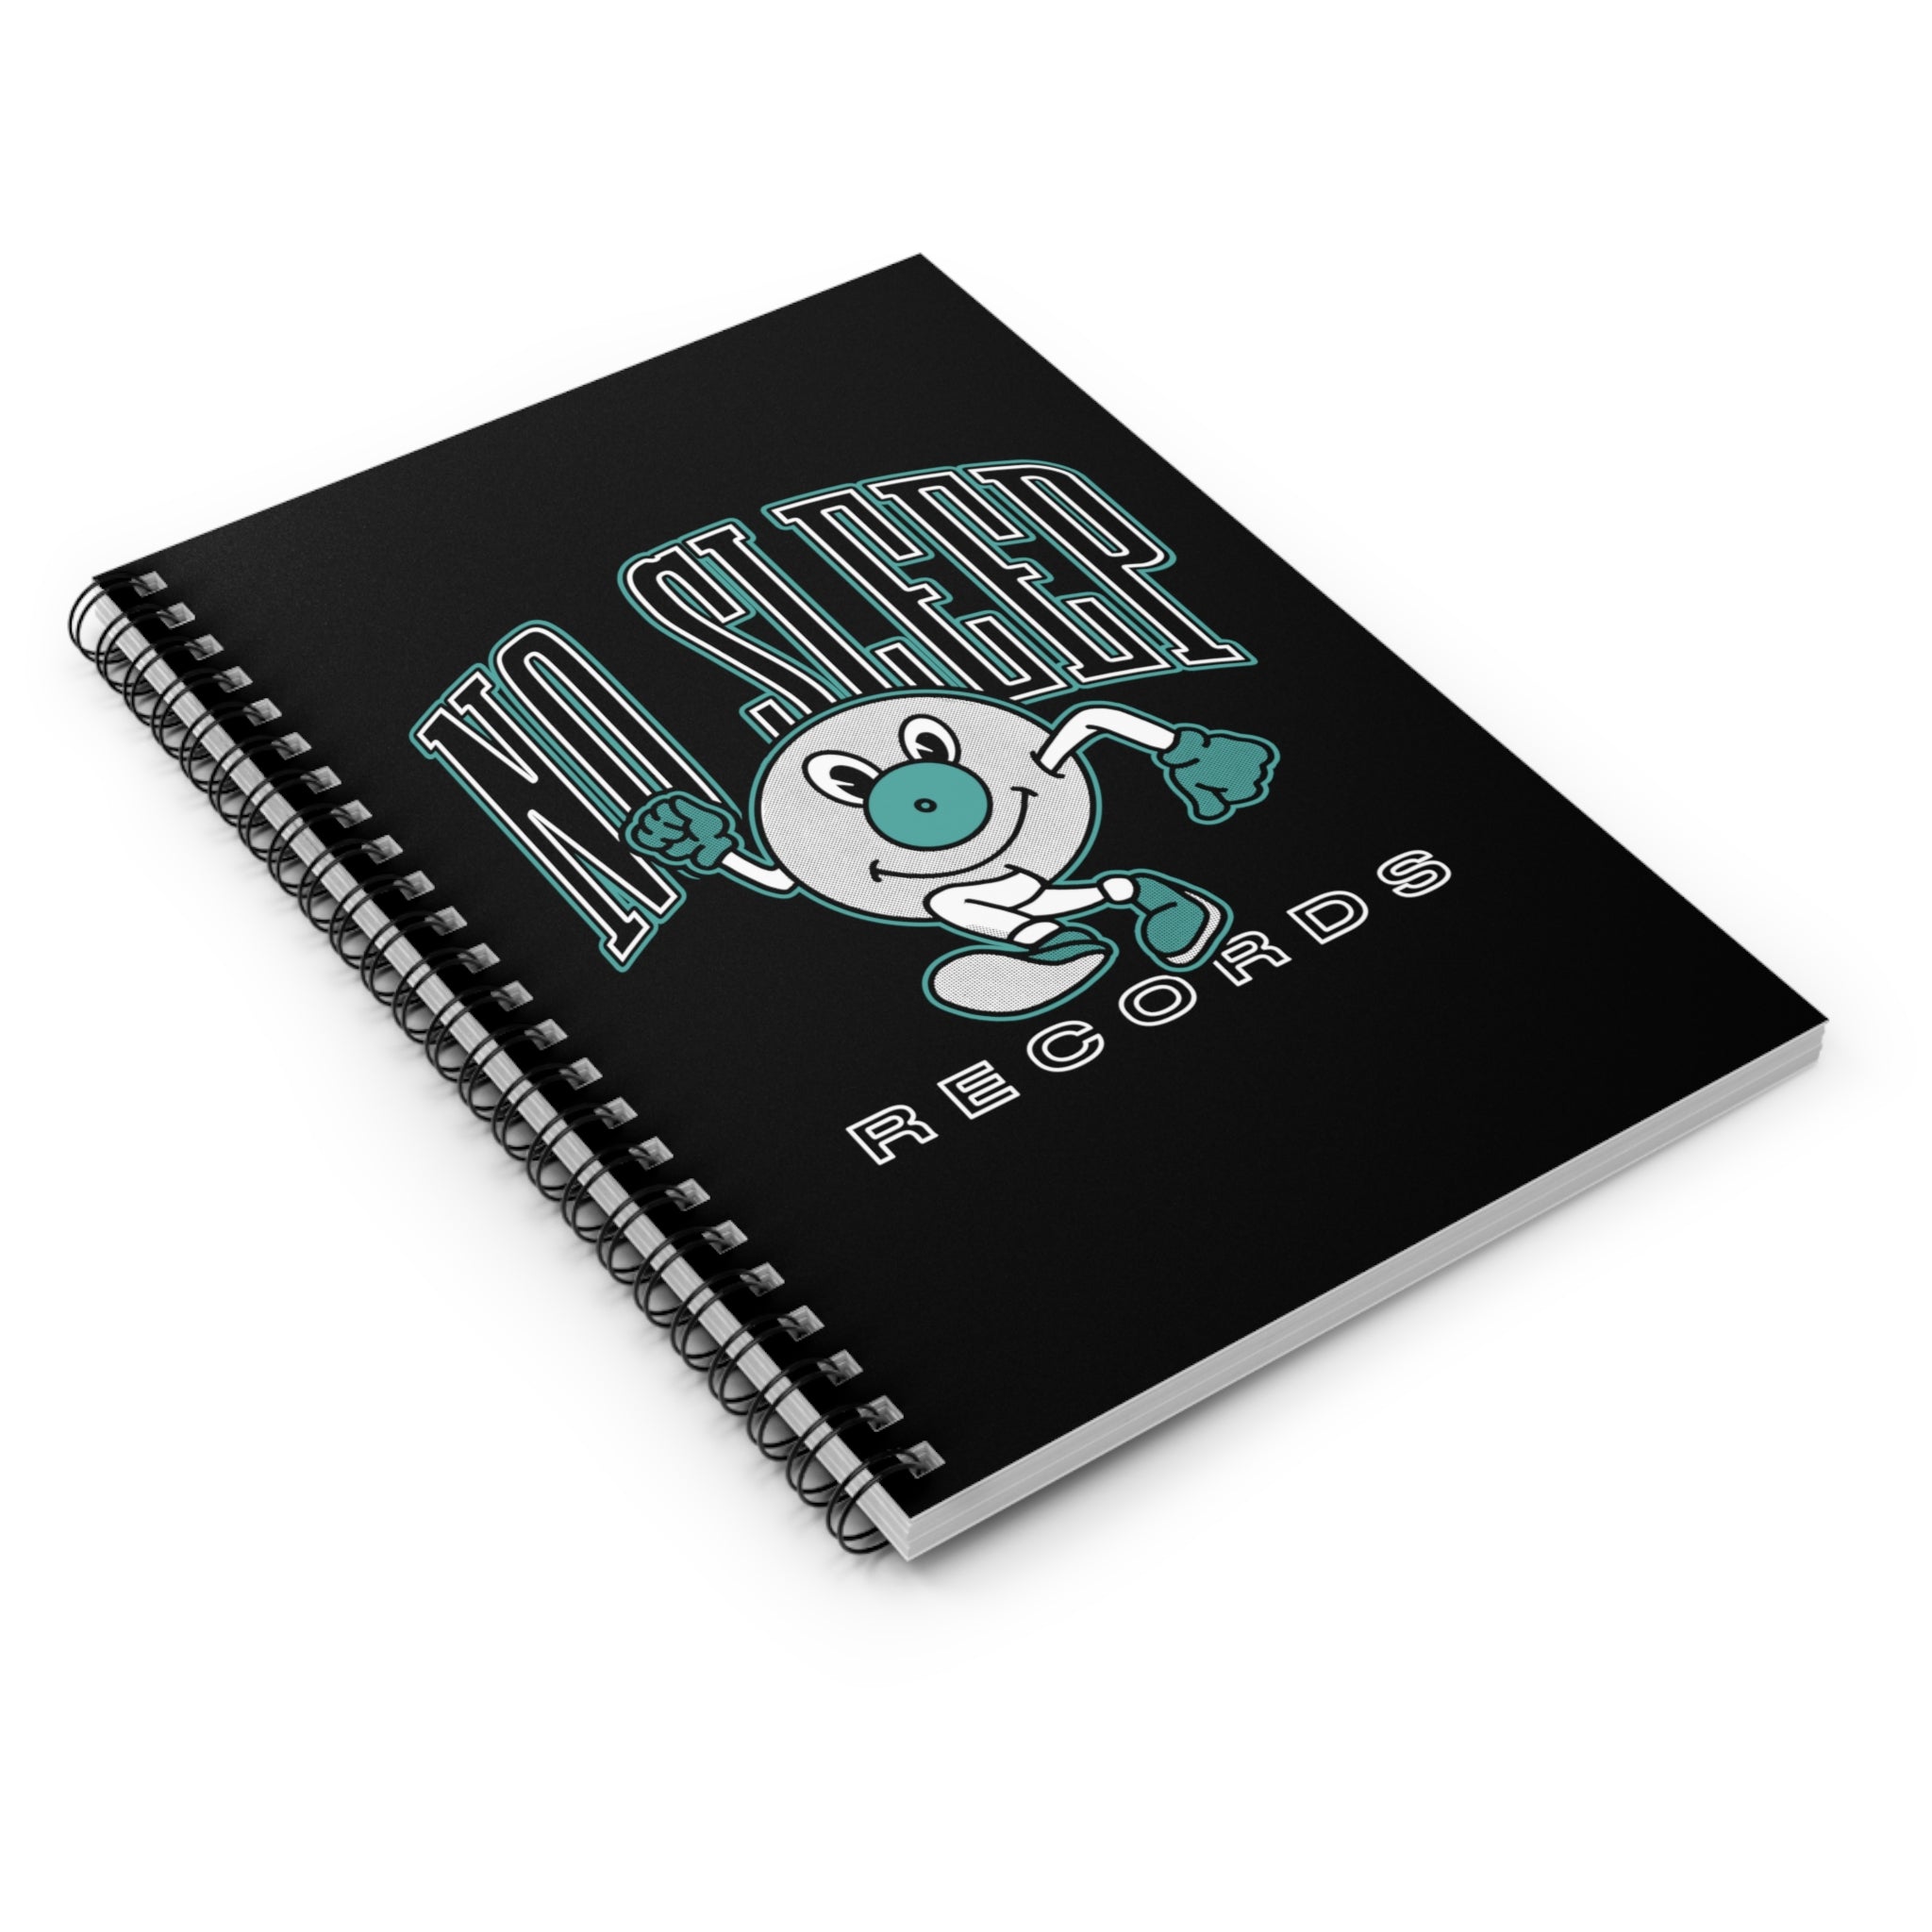 Vinyl Mascot Spiral Notebook - Ruled Line